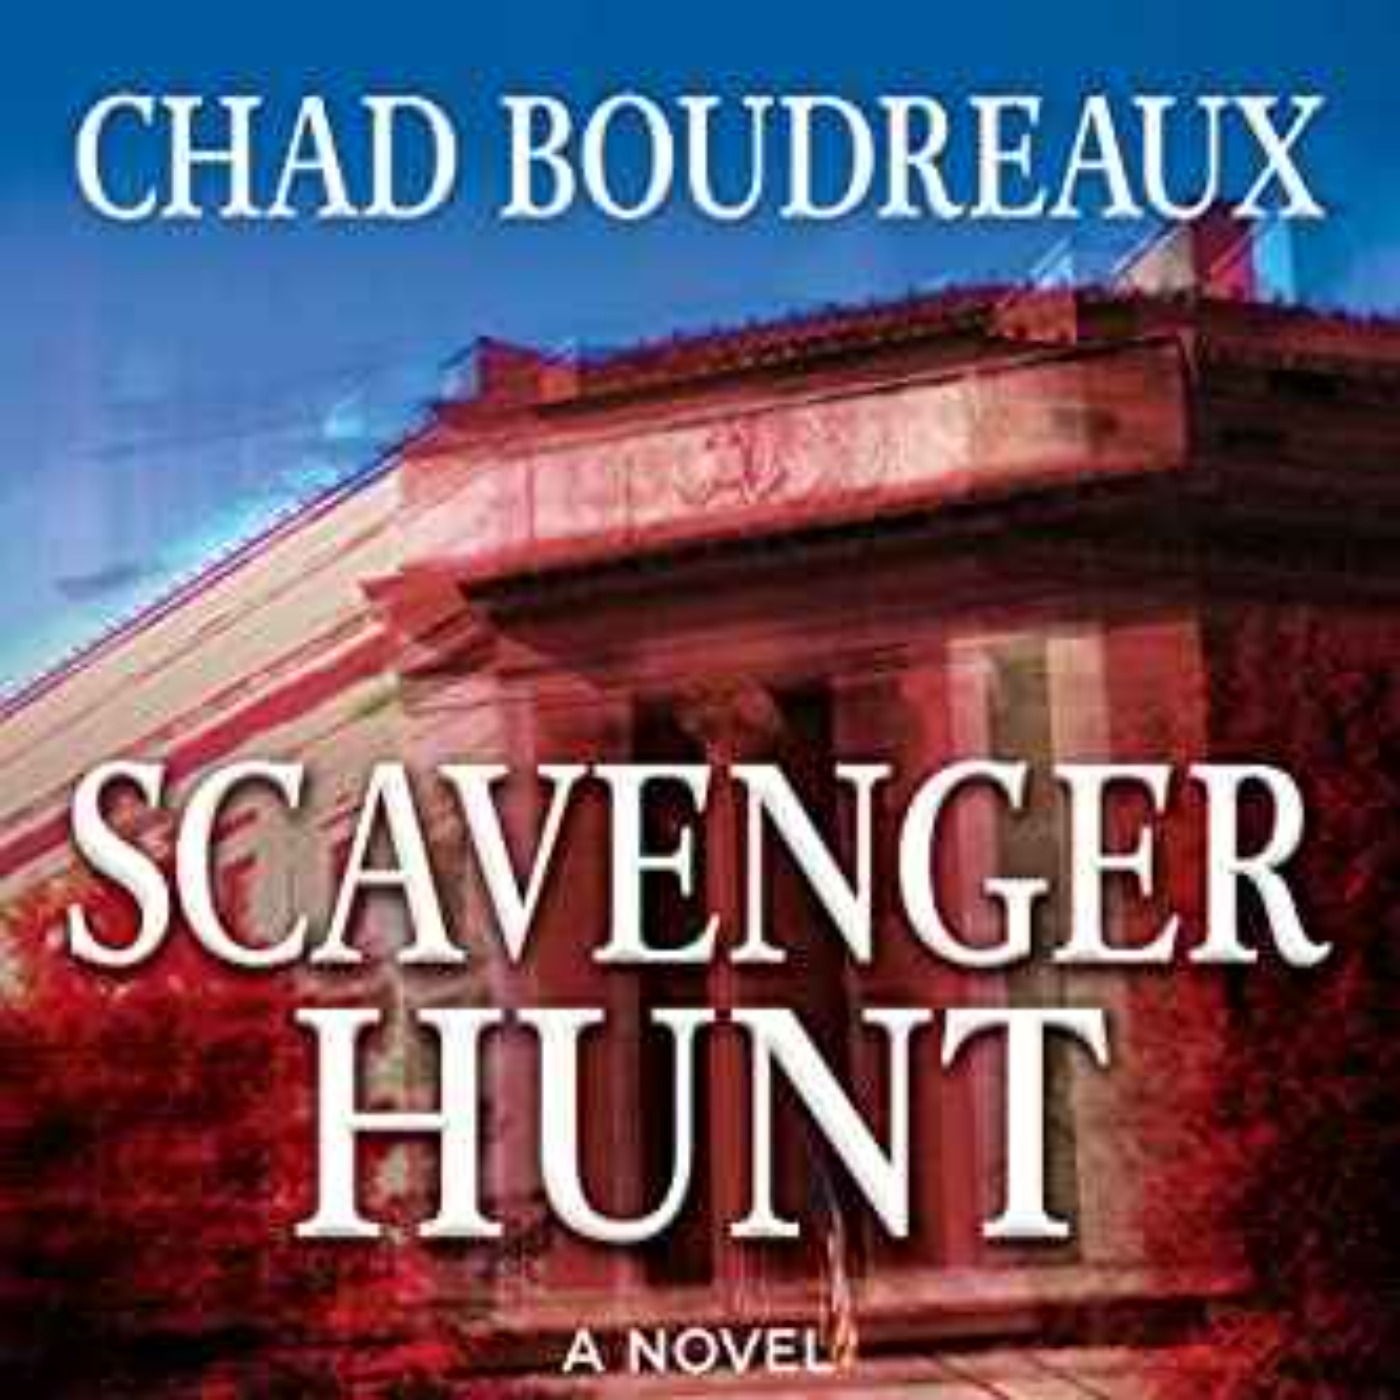 cover art for Chad Boudreaux - Scavenger Hunt: A Novel